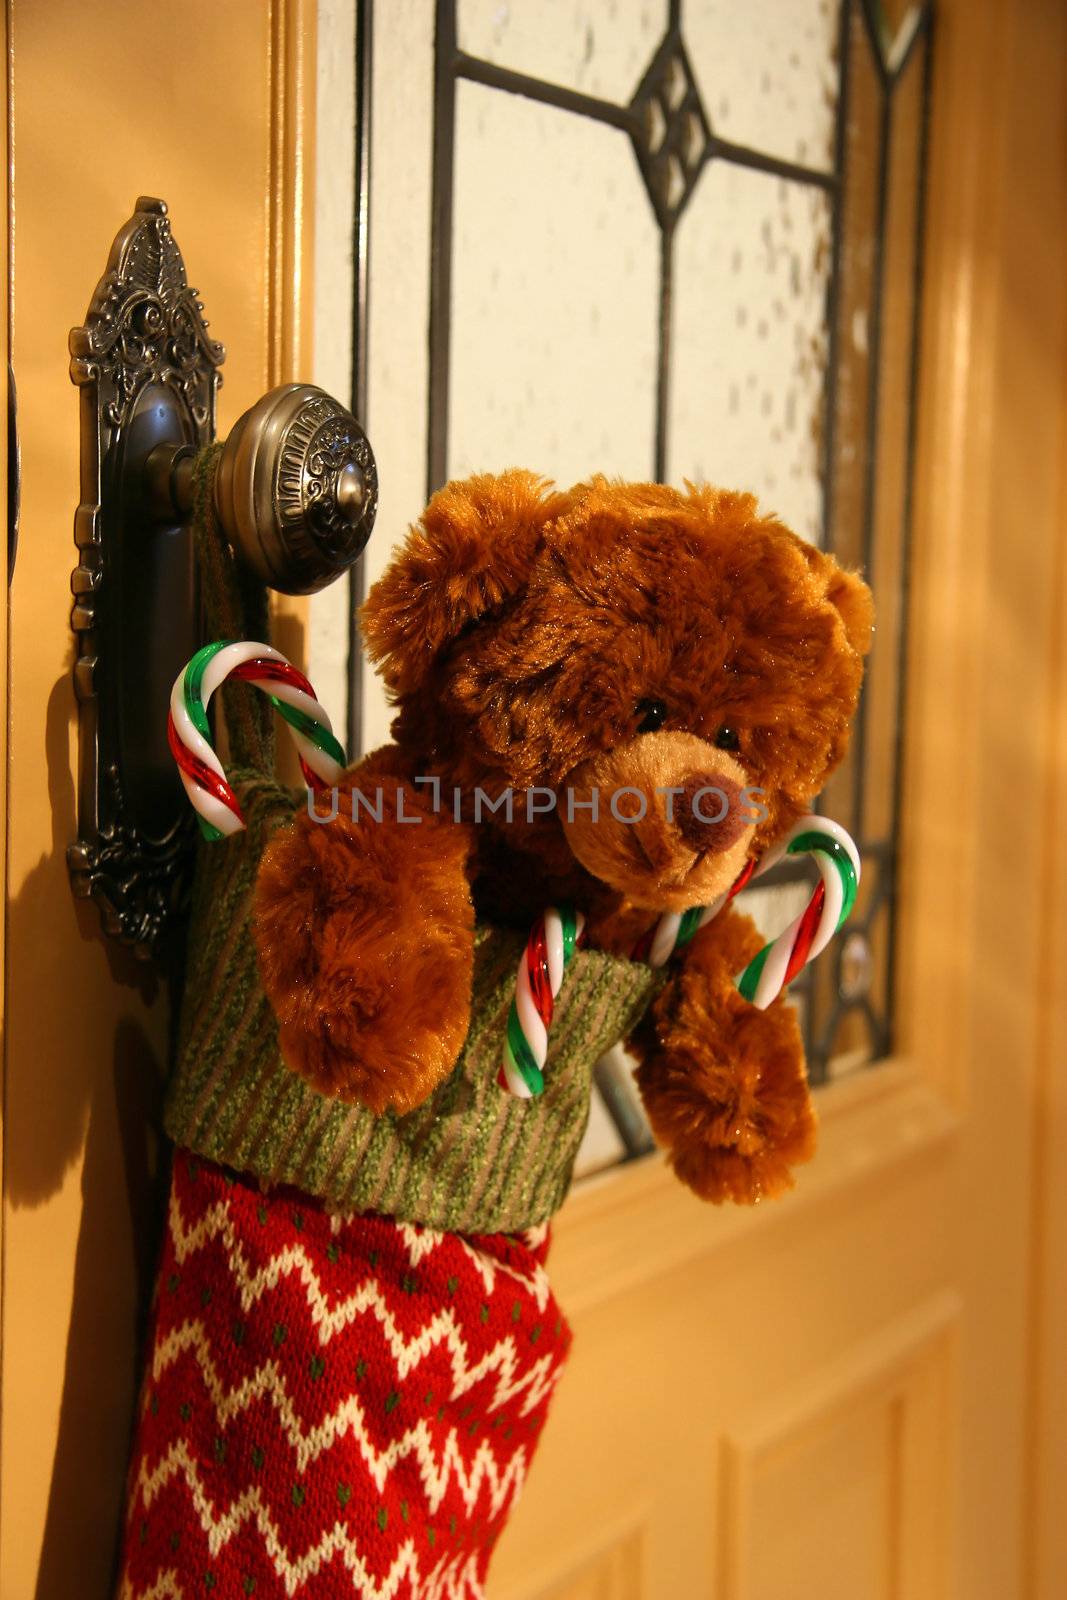 Teddy bear in stocking hanging on a door knob